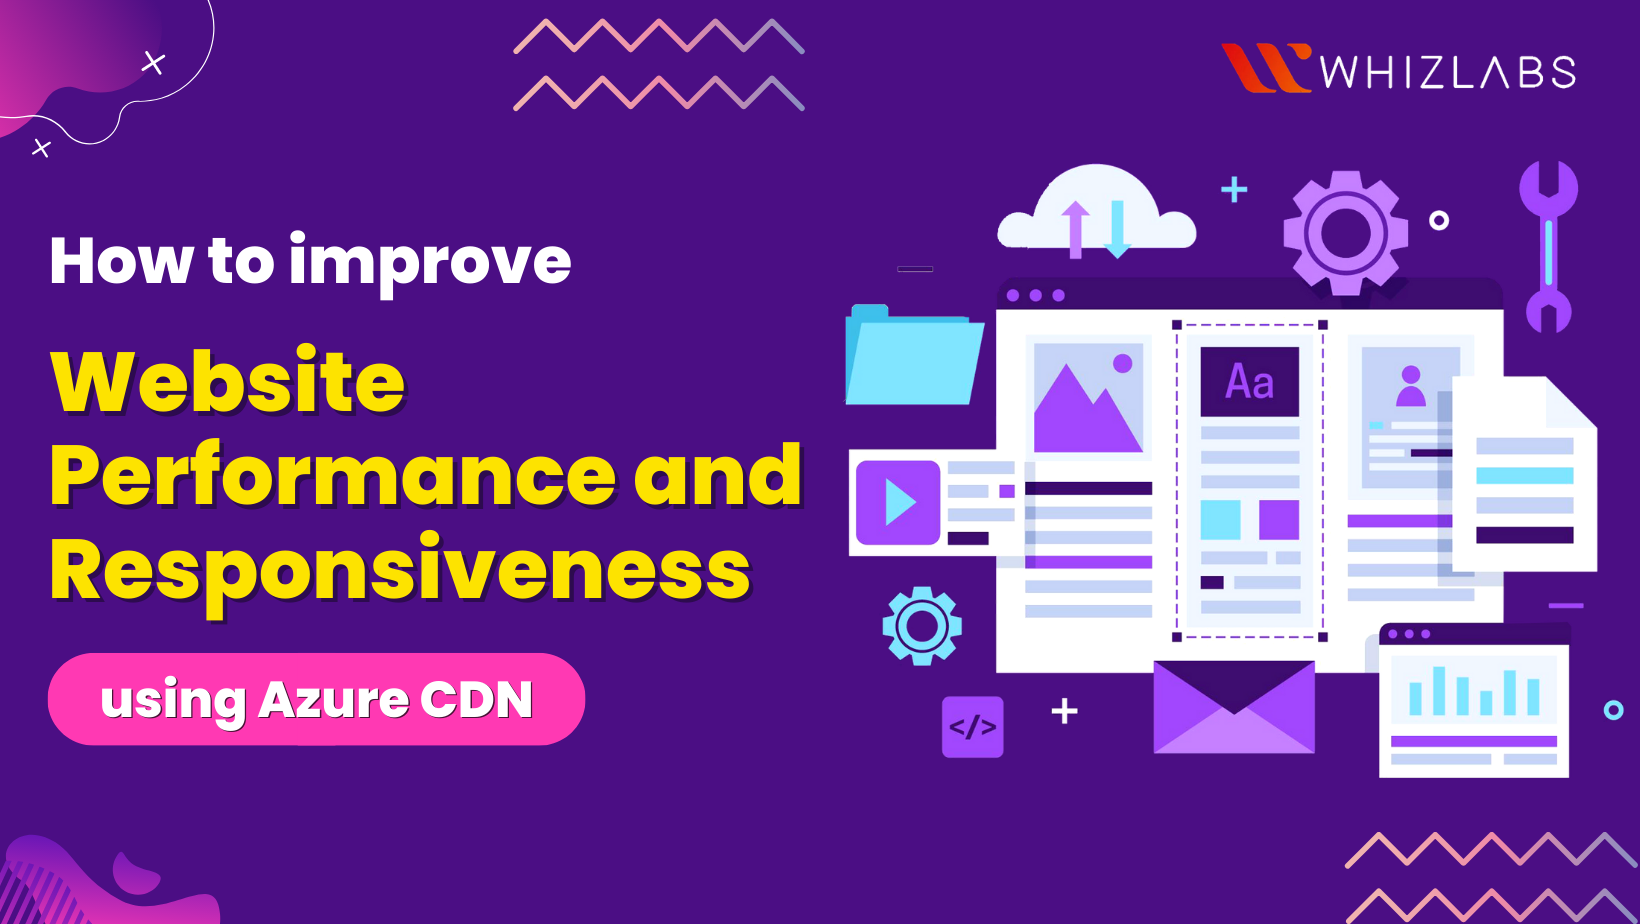 How to improve website performance using Azure CDN?